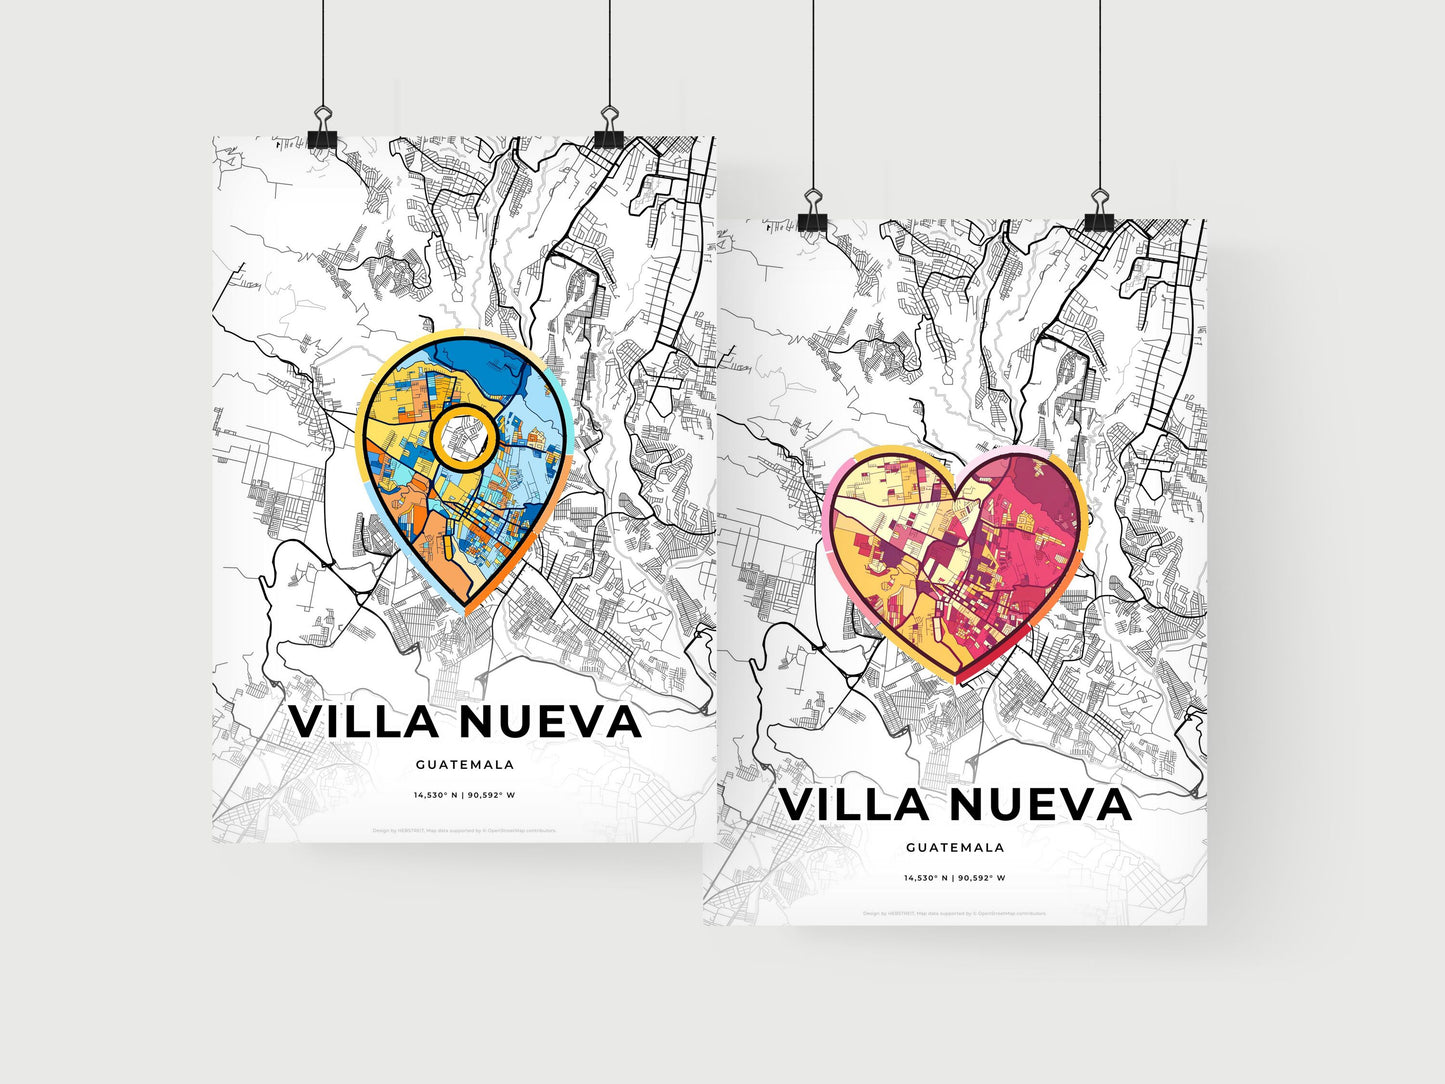 VILLA NUEVA GUATEMALA minimal art map with a colorful icon.